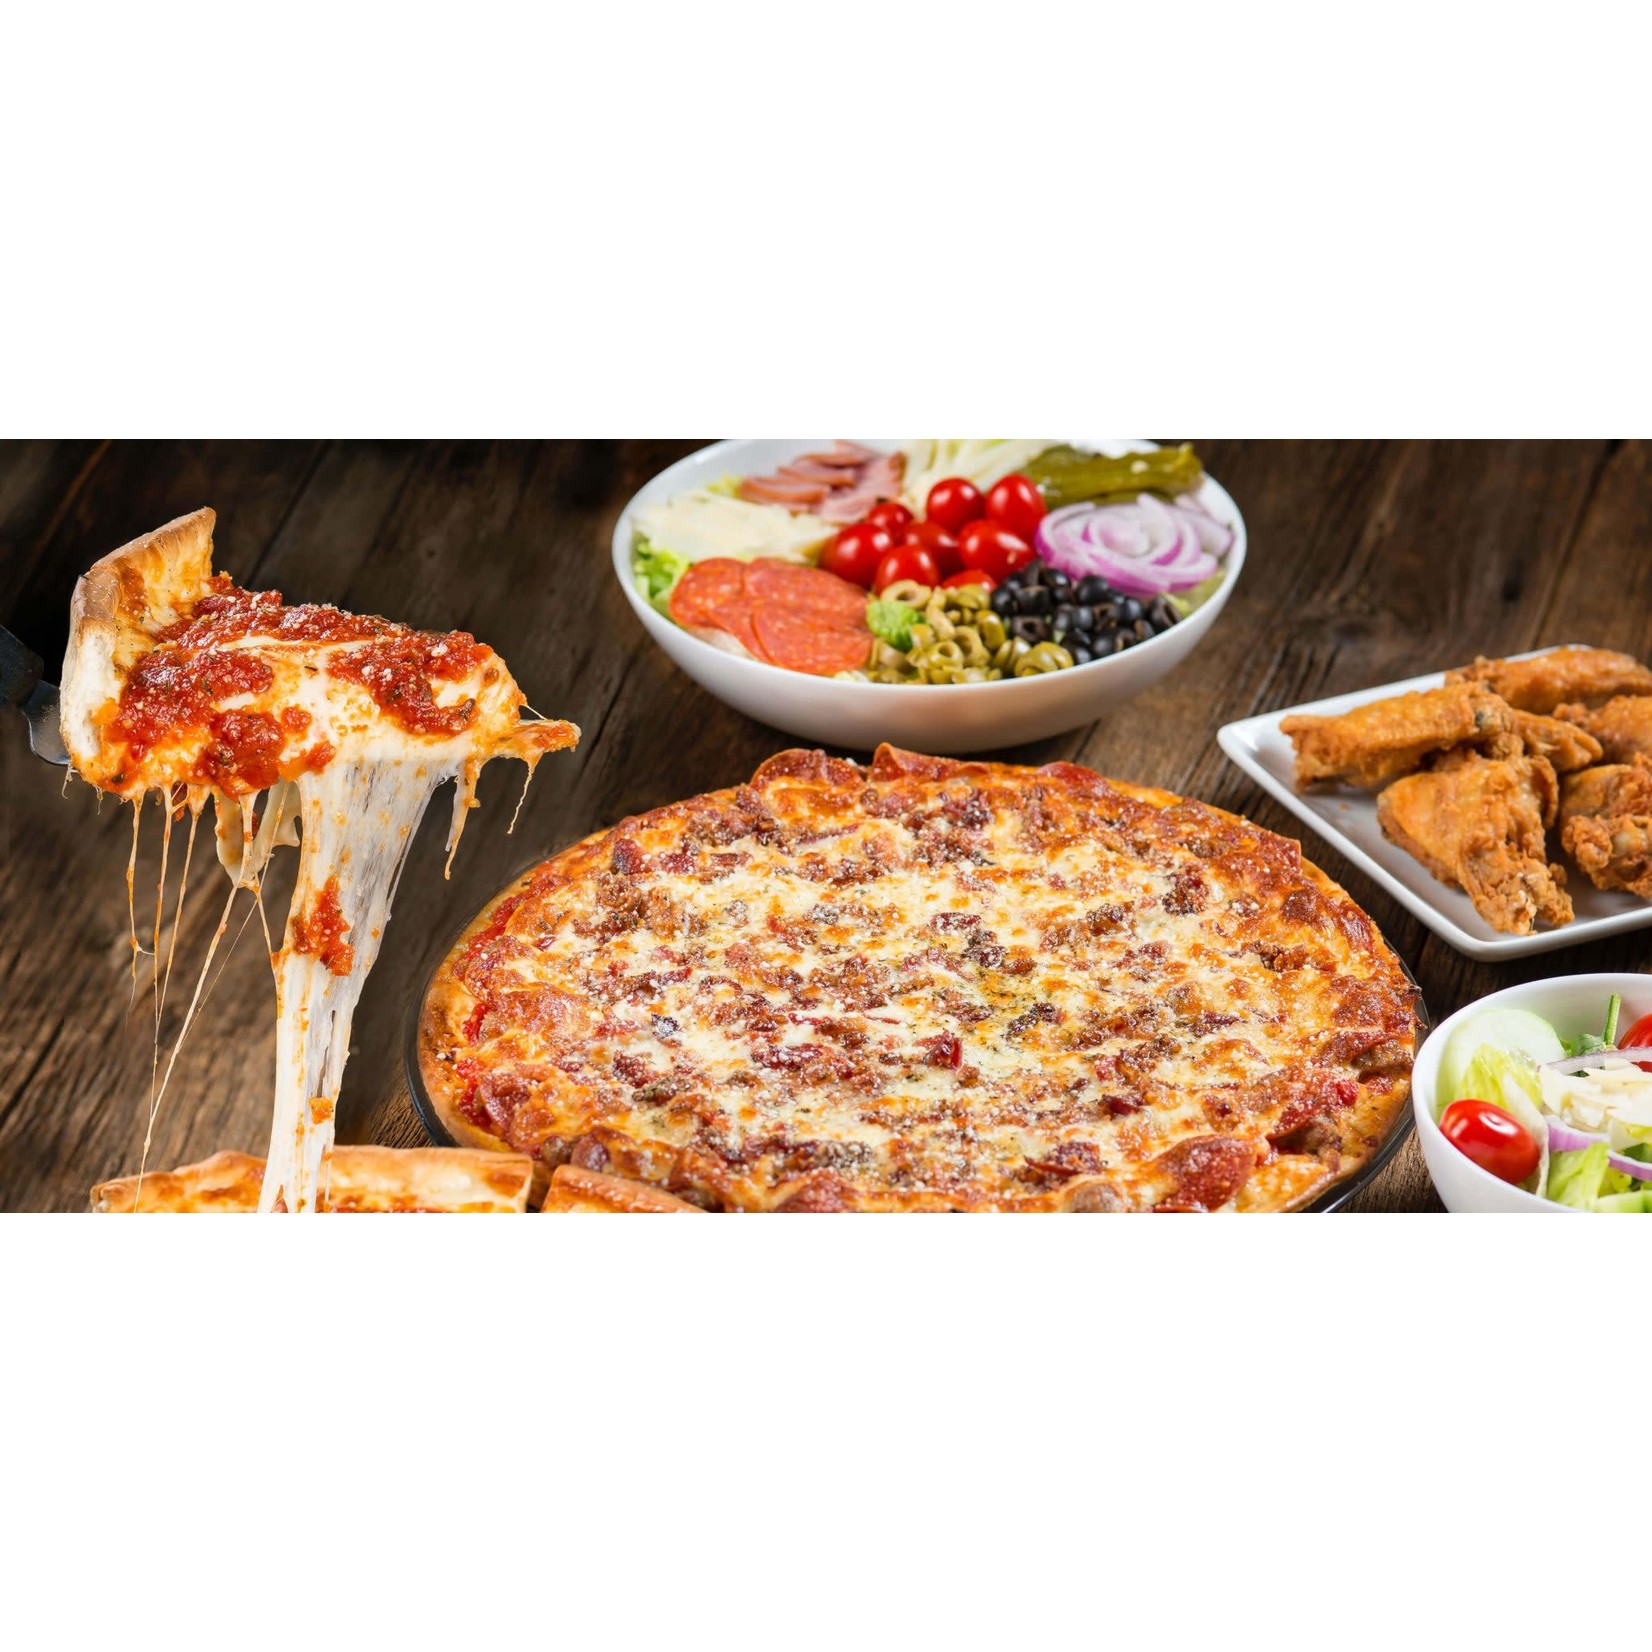 Rosati's Pizza Rosati's Pizza-Carol Stream $5.00 Dining Certificate